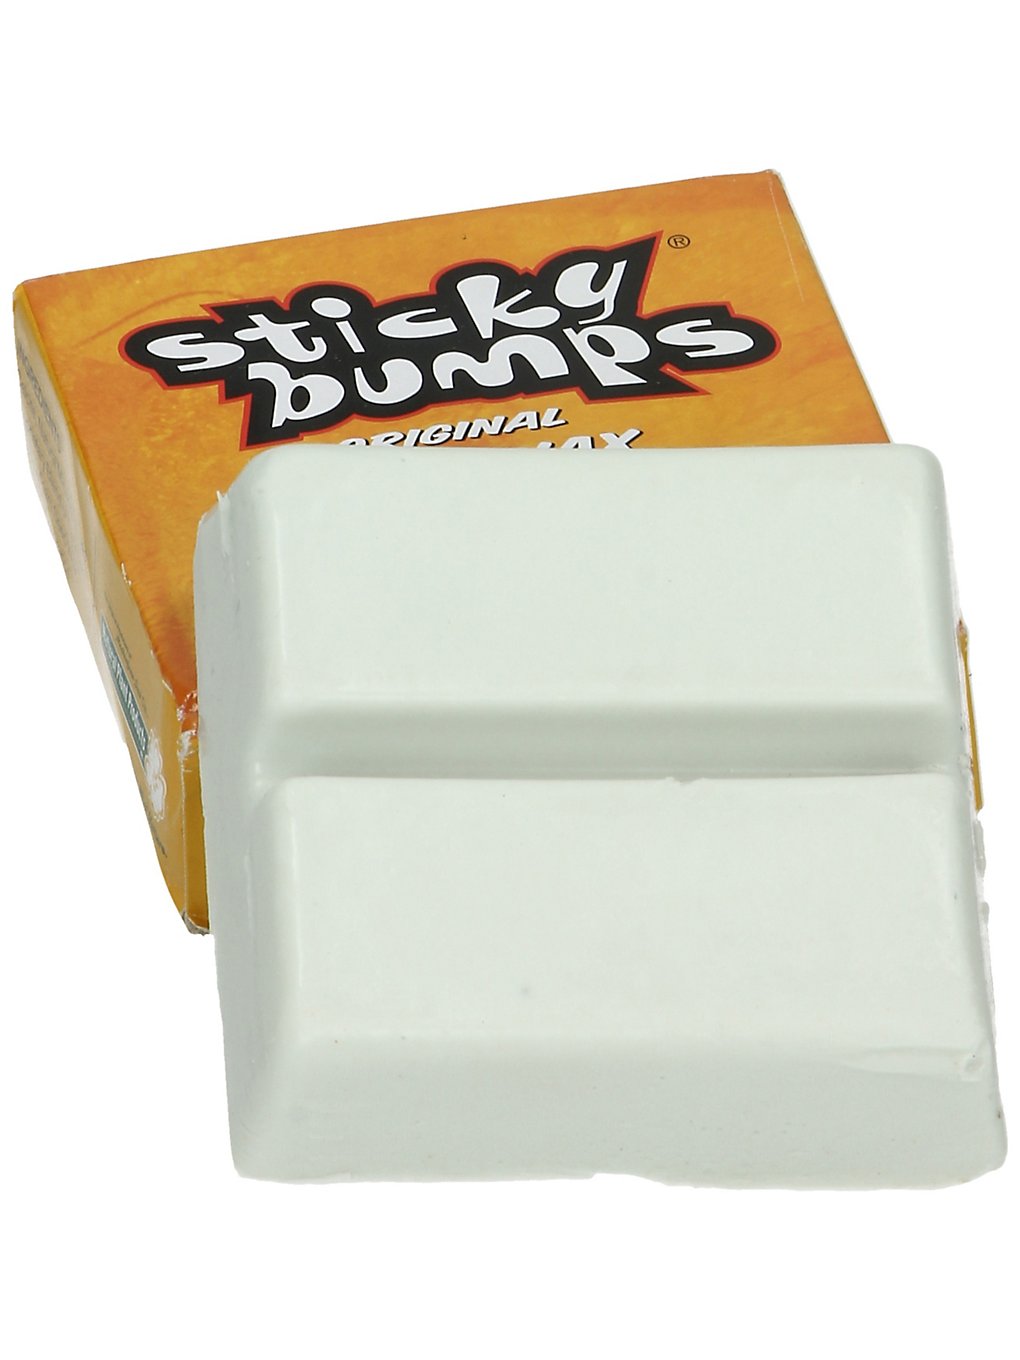 Sticky Bumps Original Warm 17-24°C à motifs